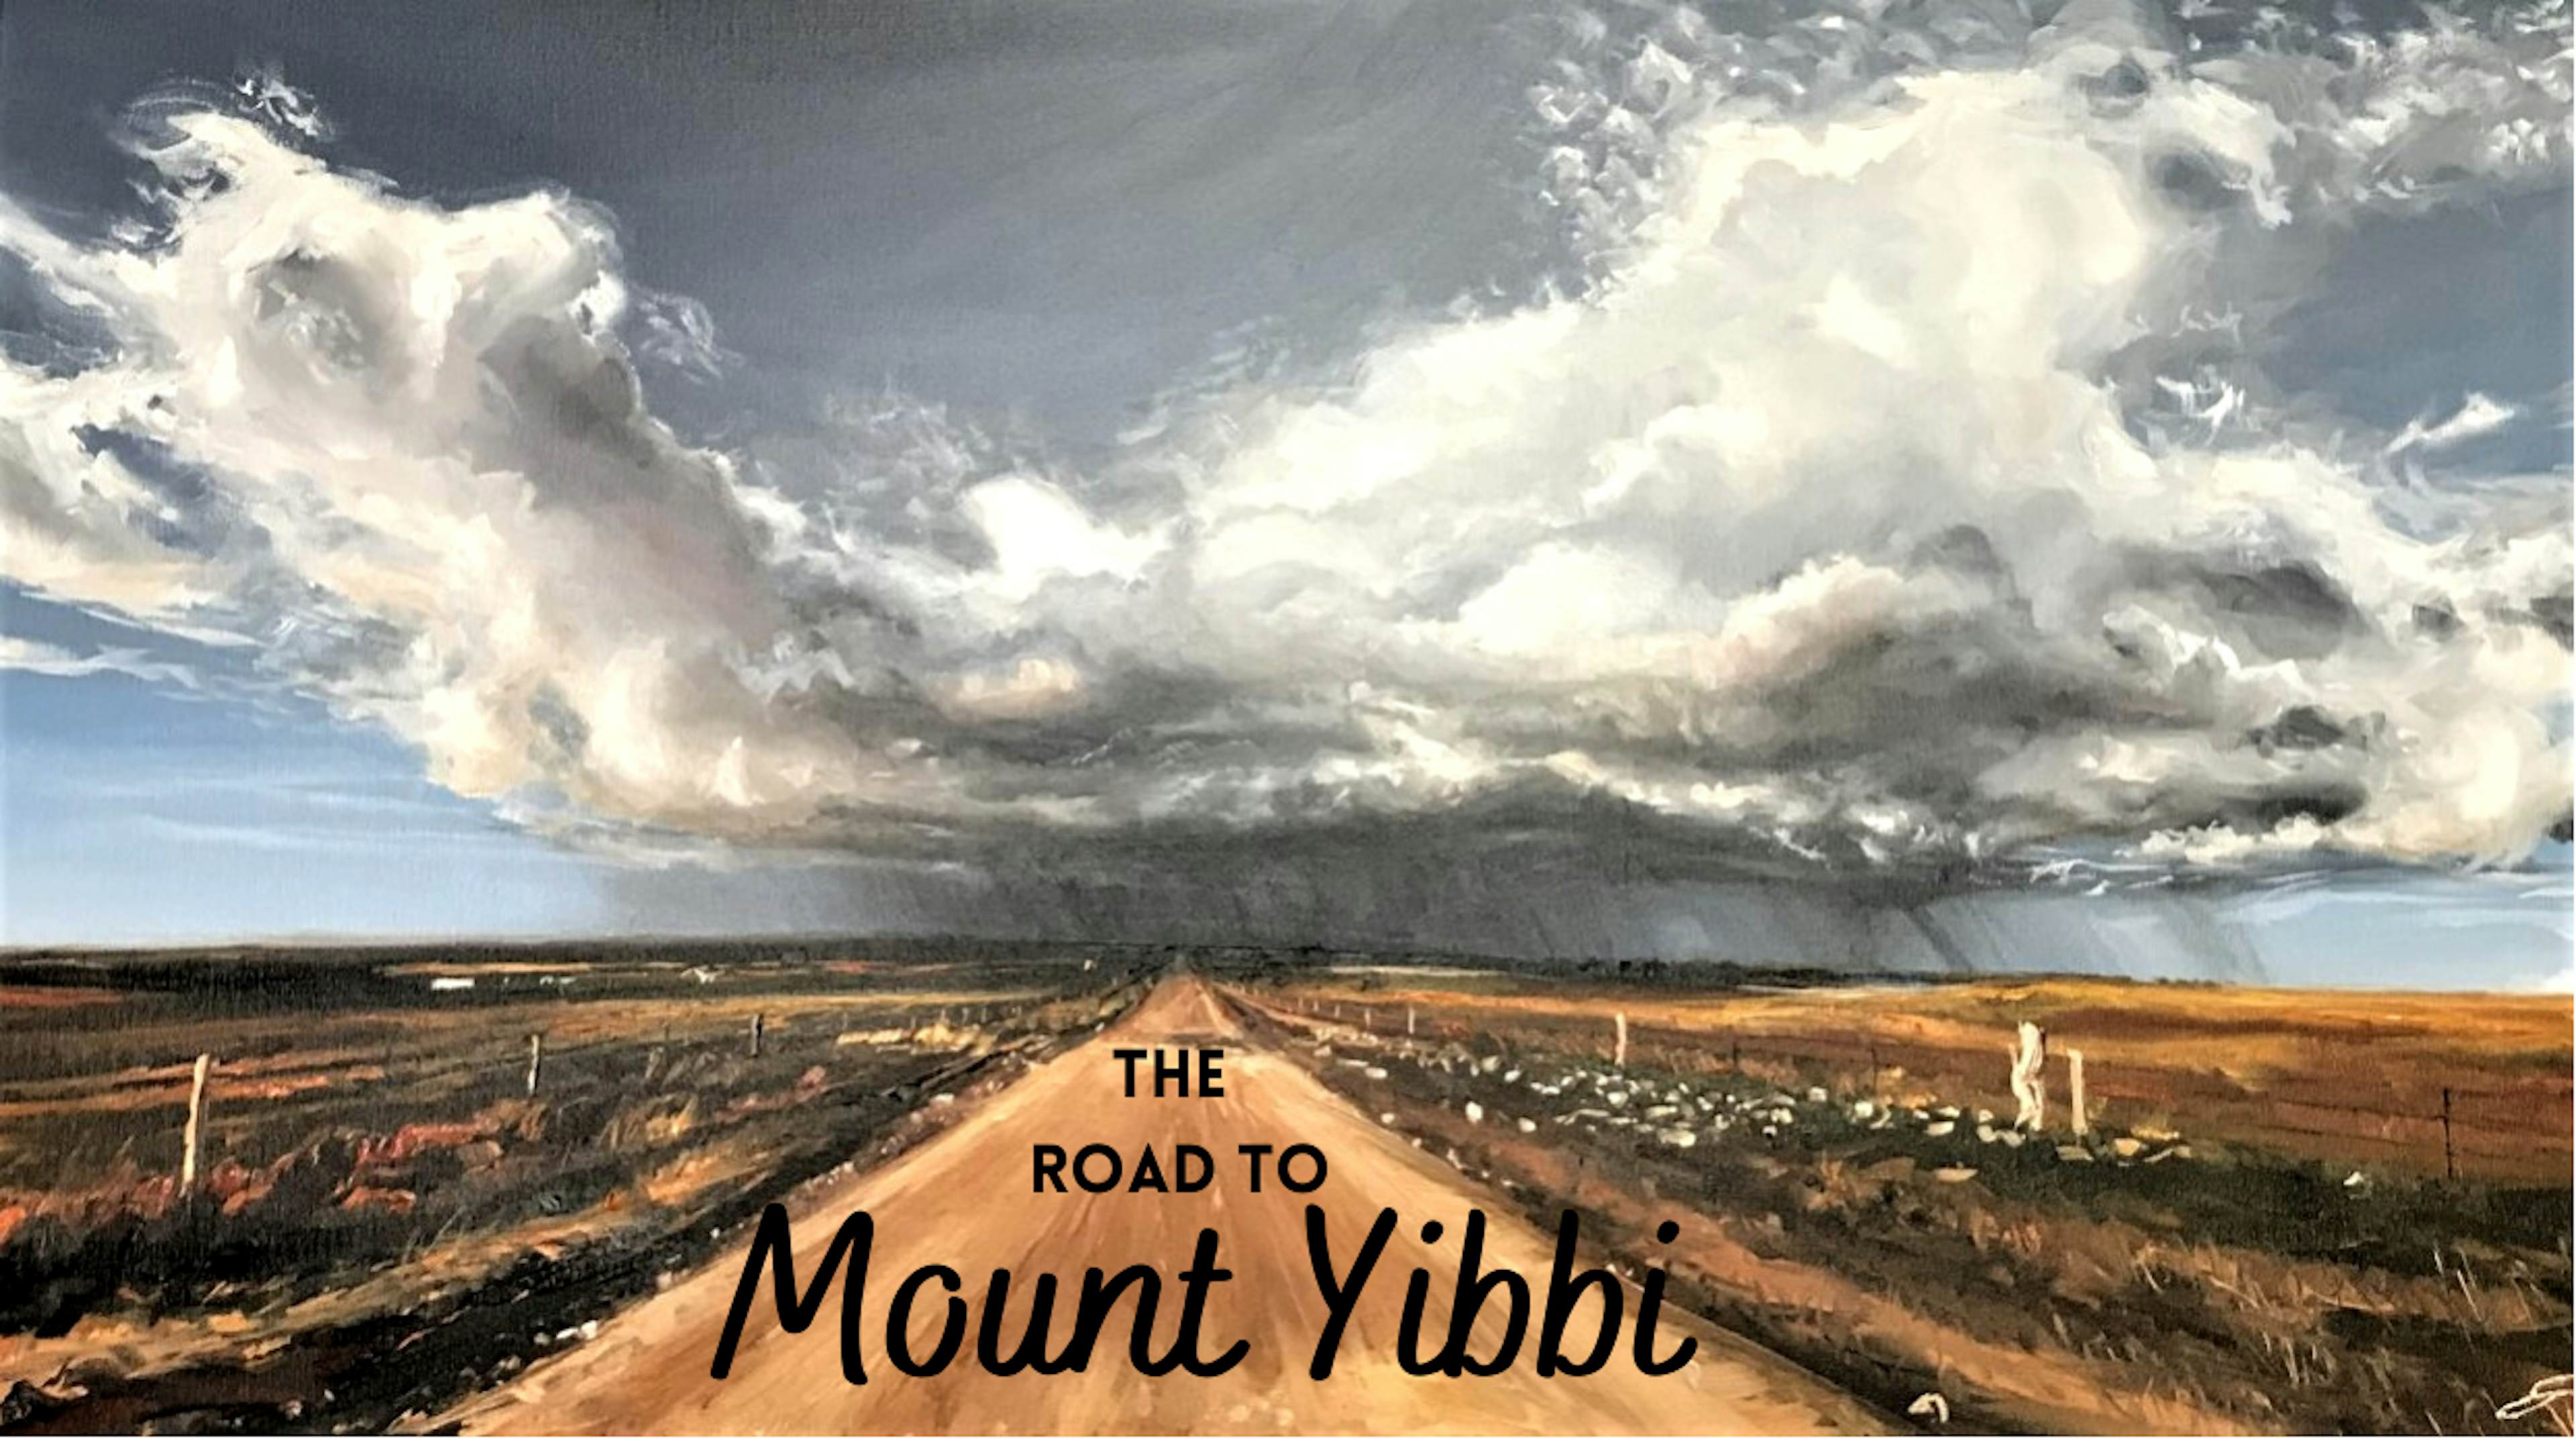 The Road to Mt Yibbi, Hallett- The Trees image